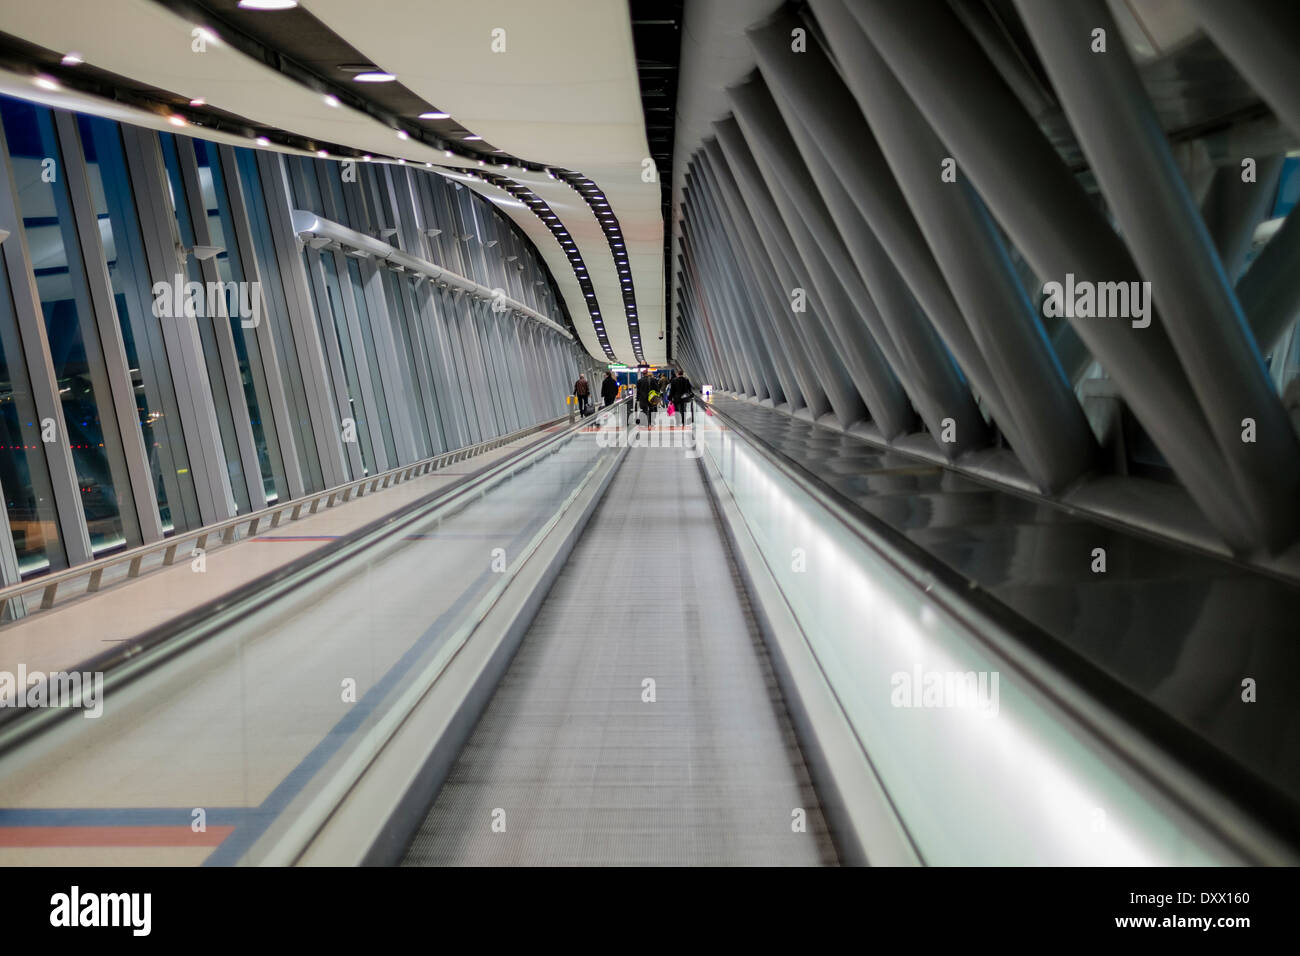 A passenger conveyor belt at Gatwick Airport, London Stock Photo